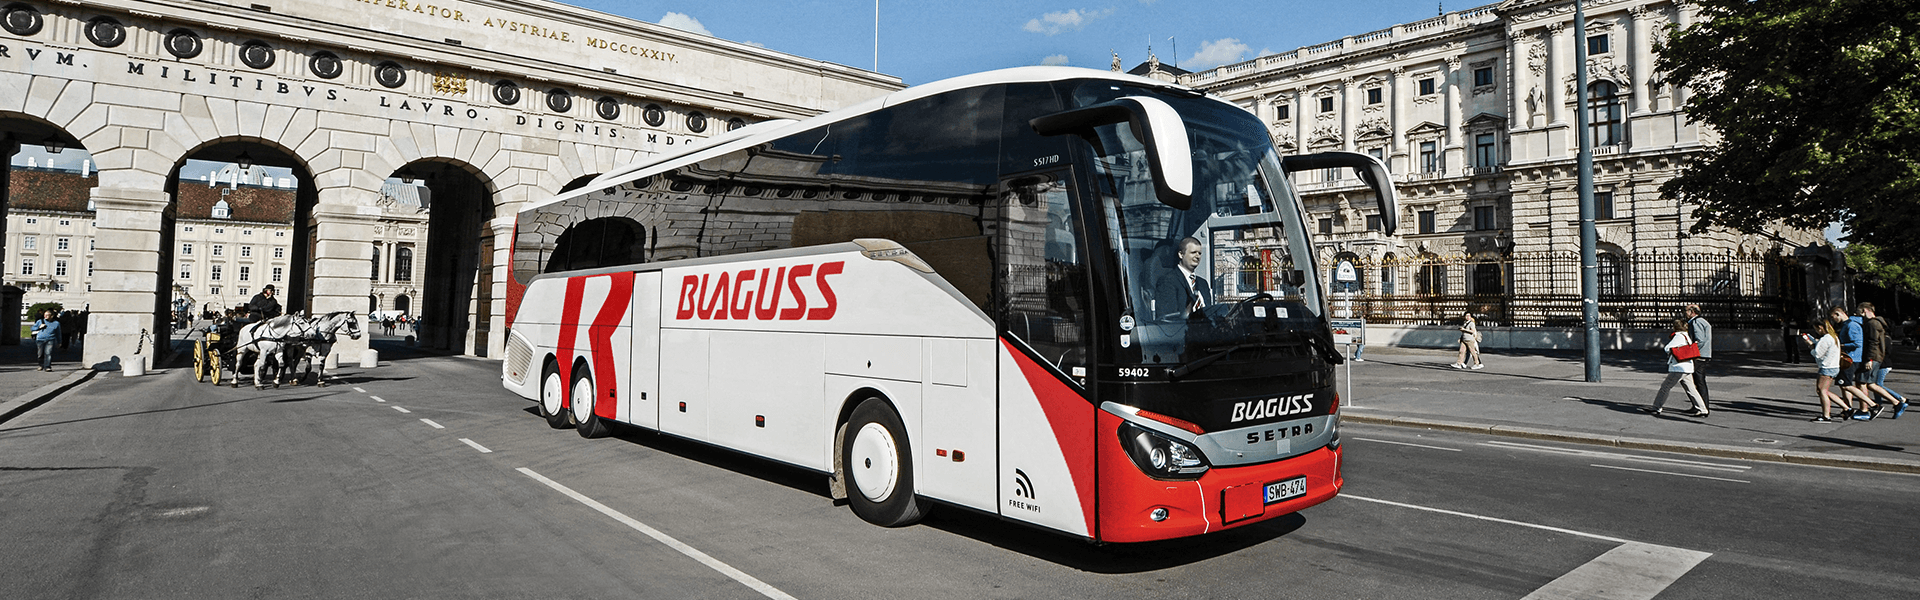 Blaguss Bus vor Hofburg